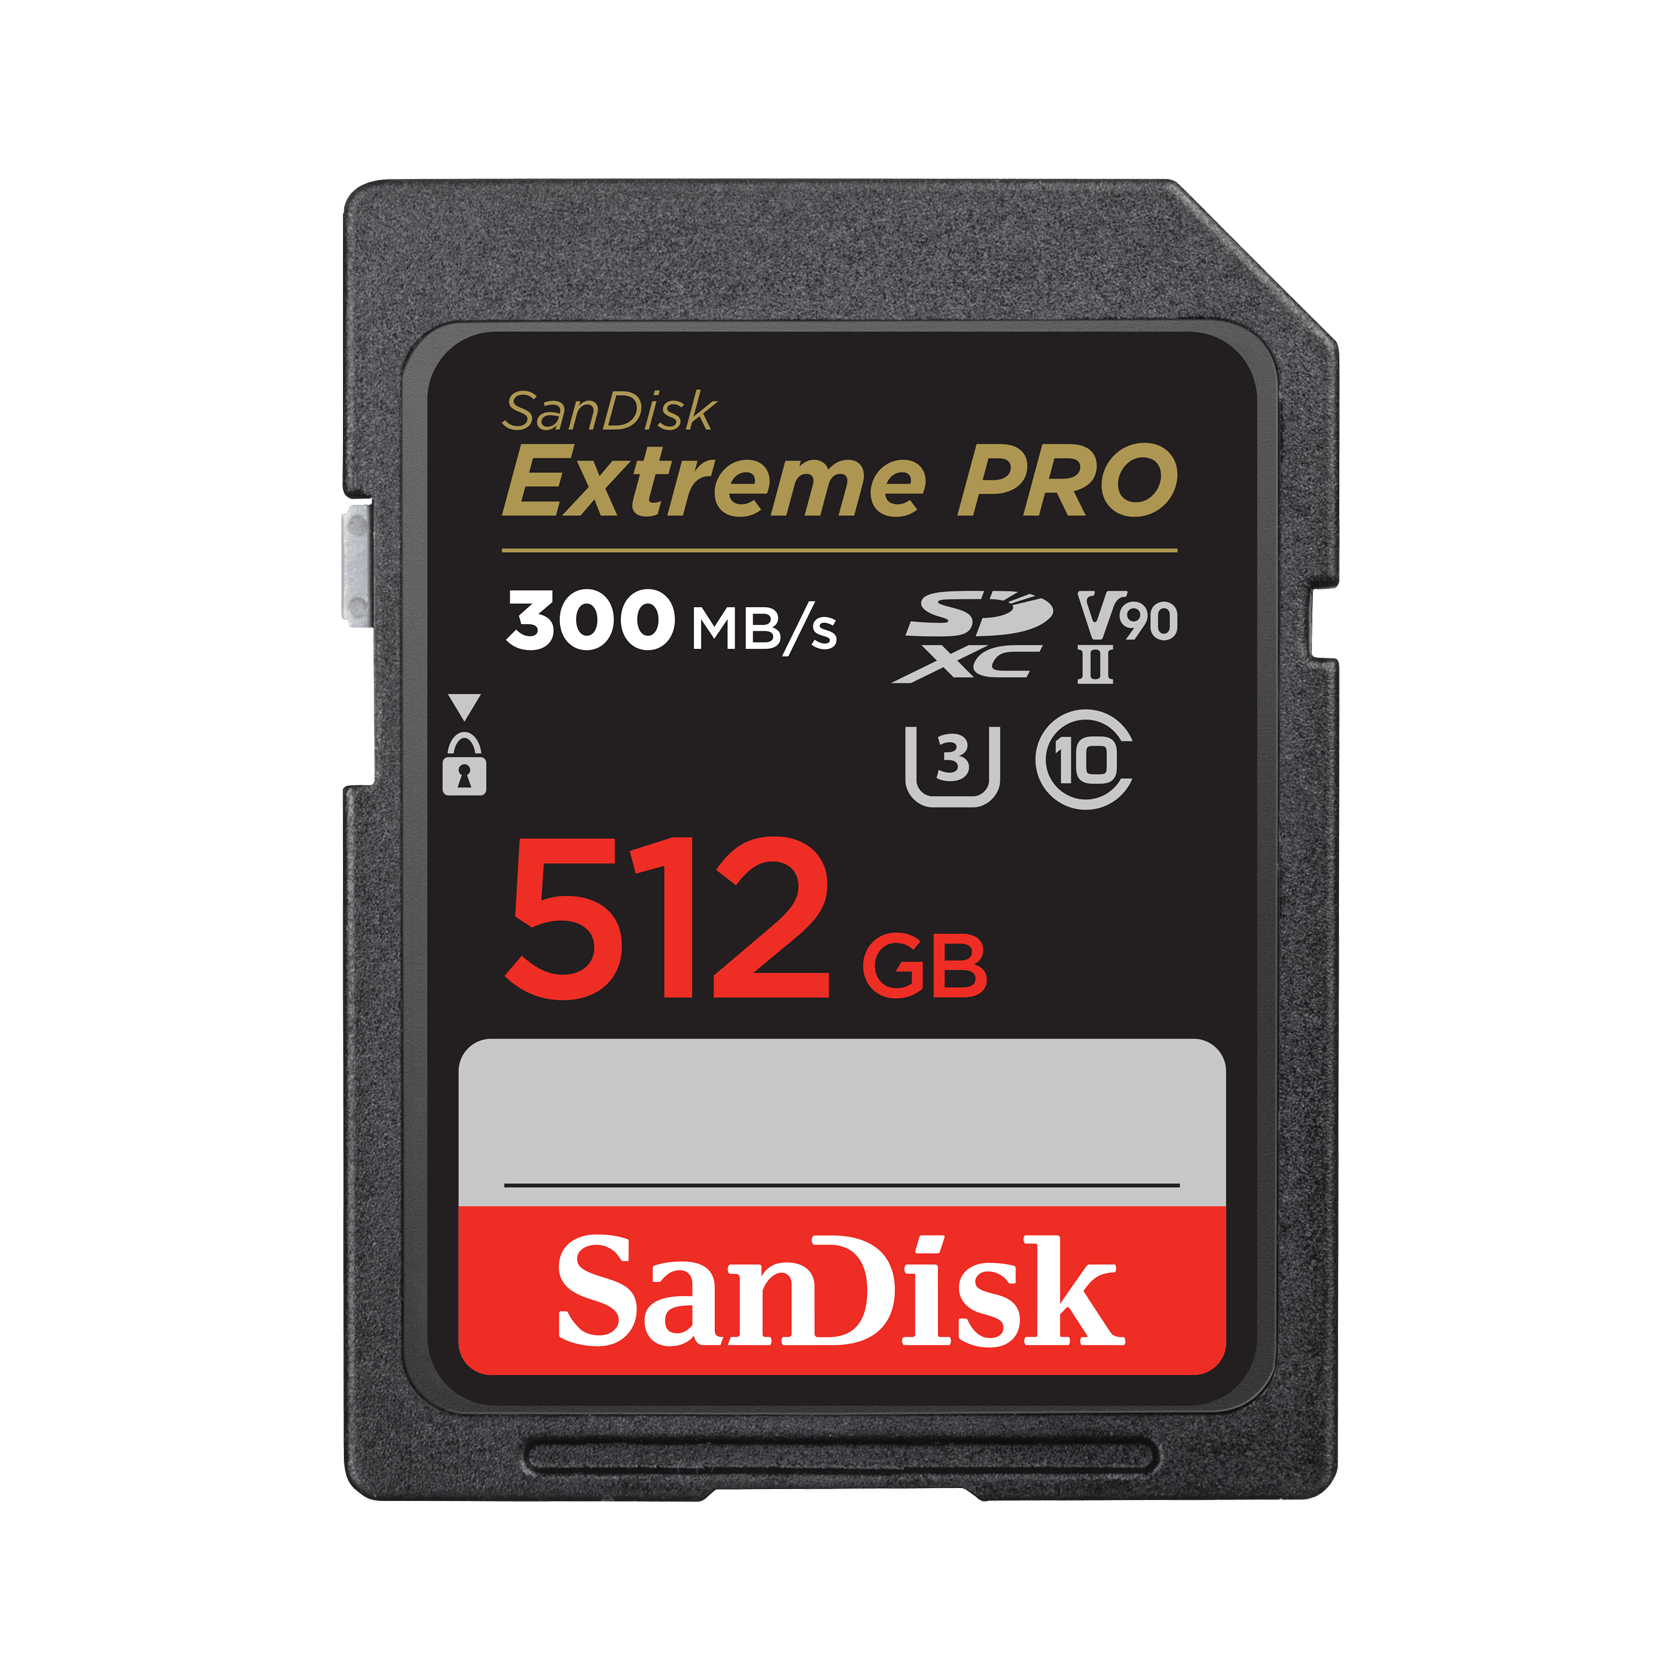 SanDisk Extreme PRO SDXCâ„¢ UHS-Il - 512GB Memory Card - SDSDXDK-512G-GN4IN